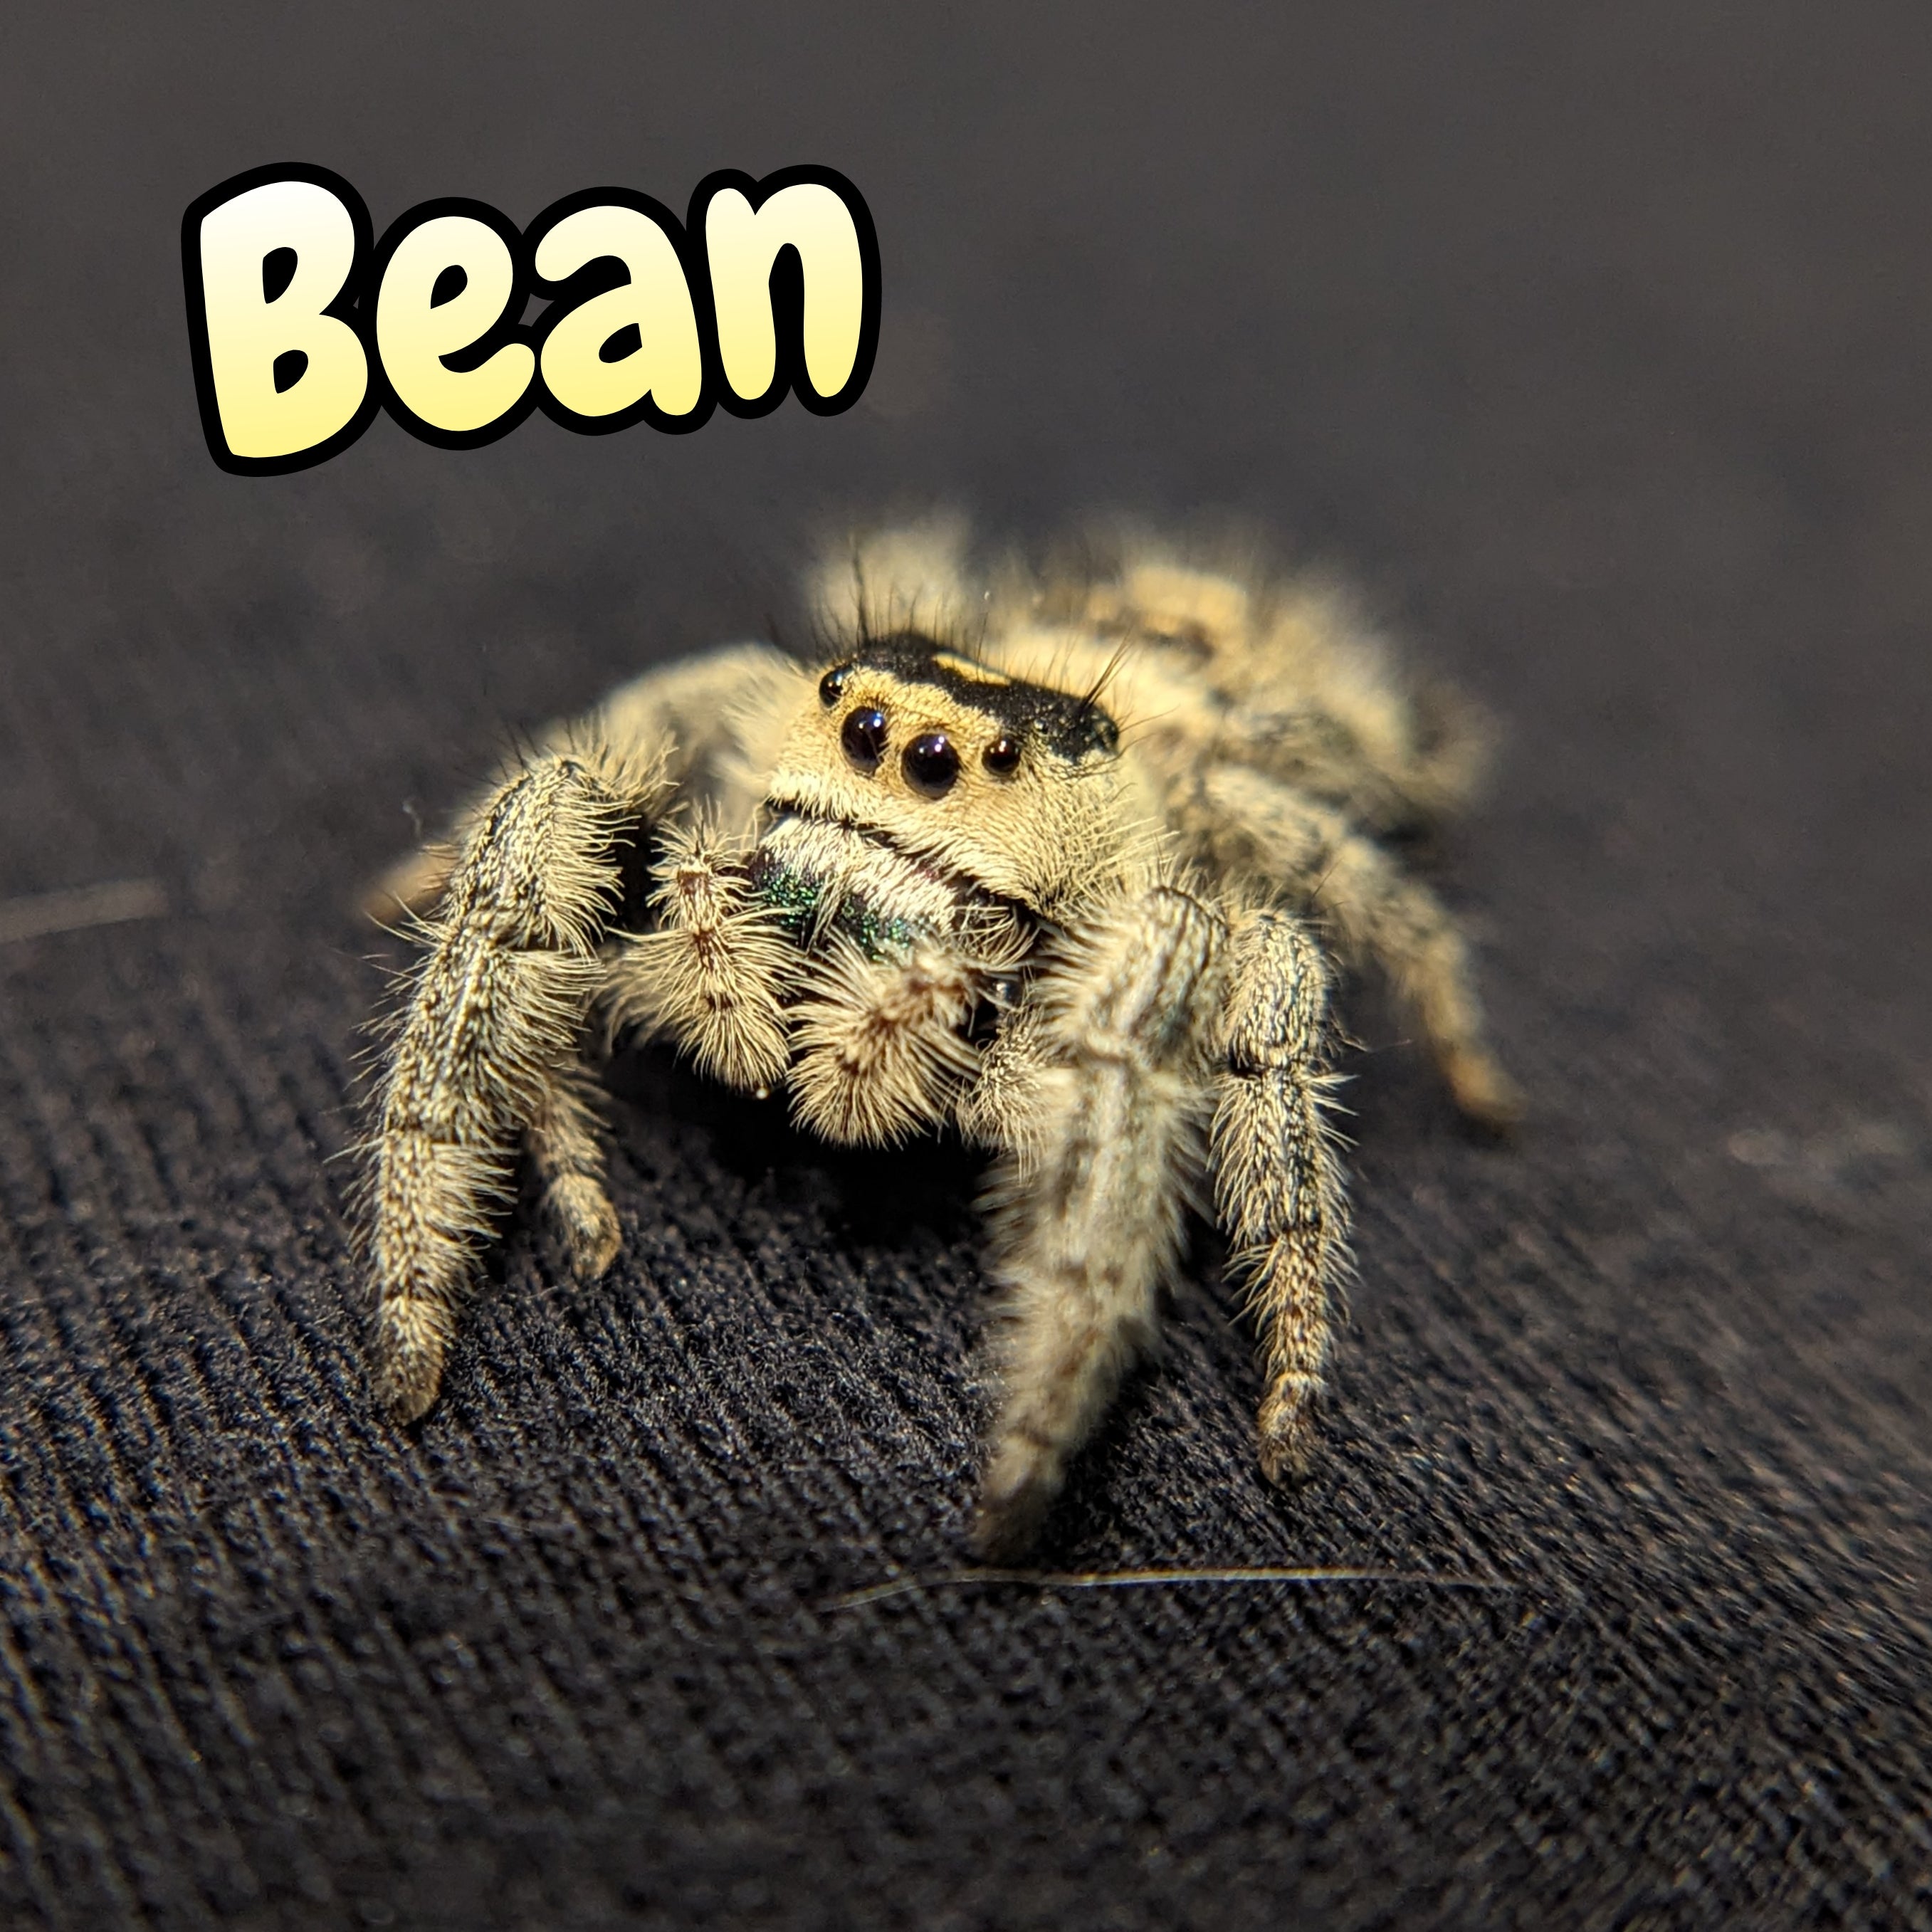 Regal Jumping Spider "Bean"